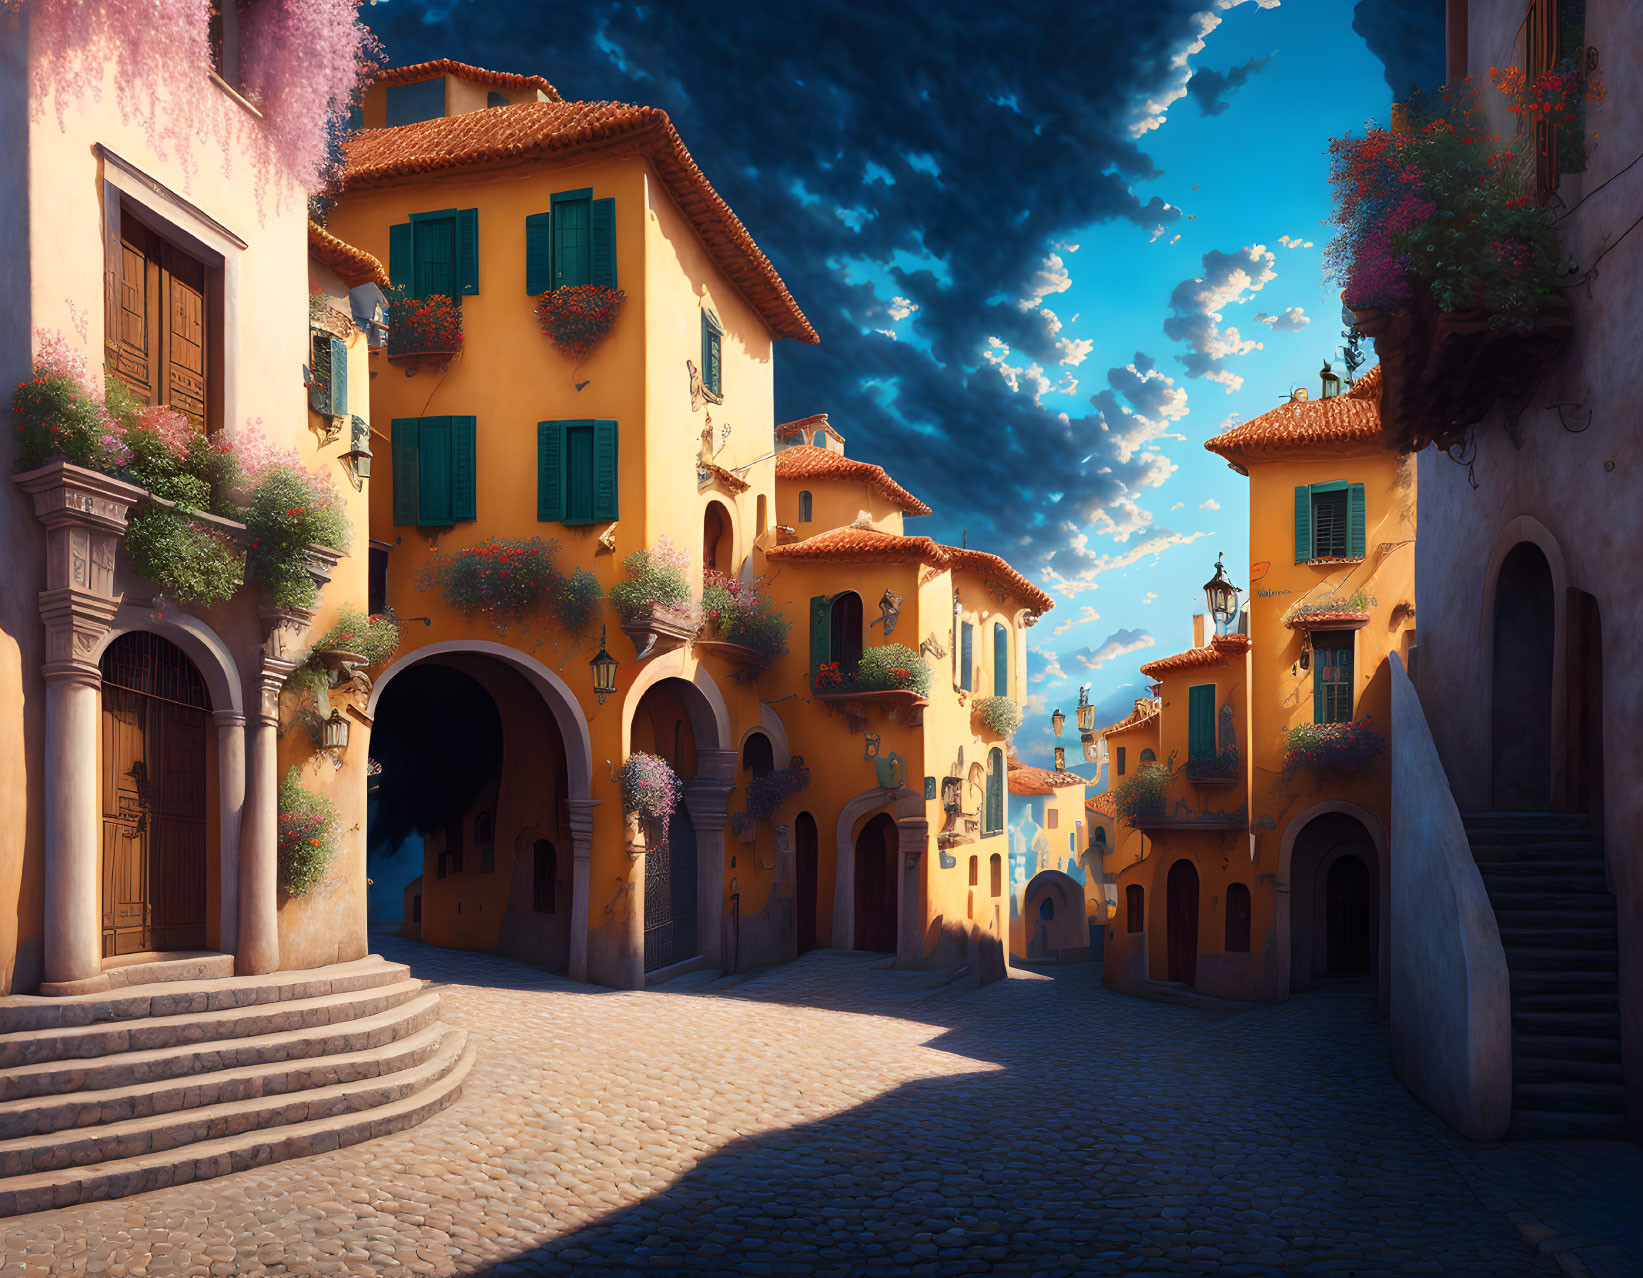 Very gorgeous medieval town street 